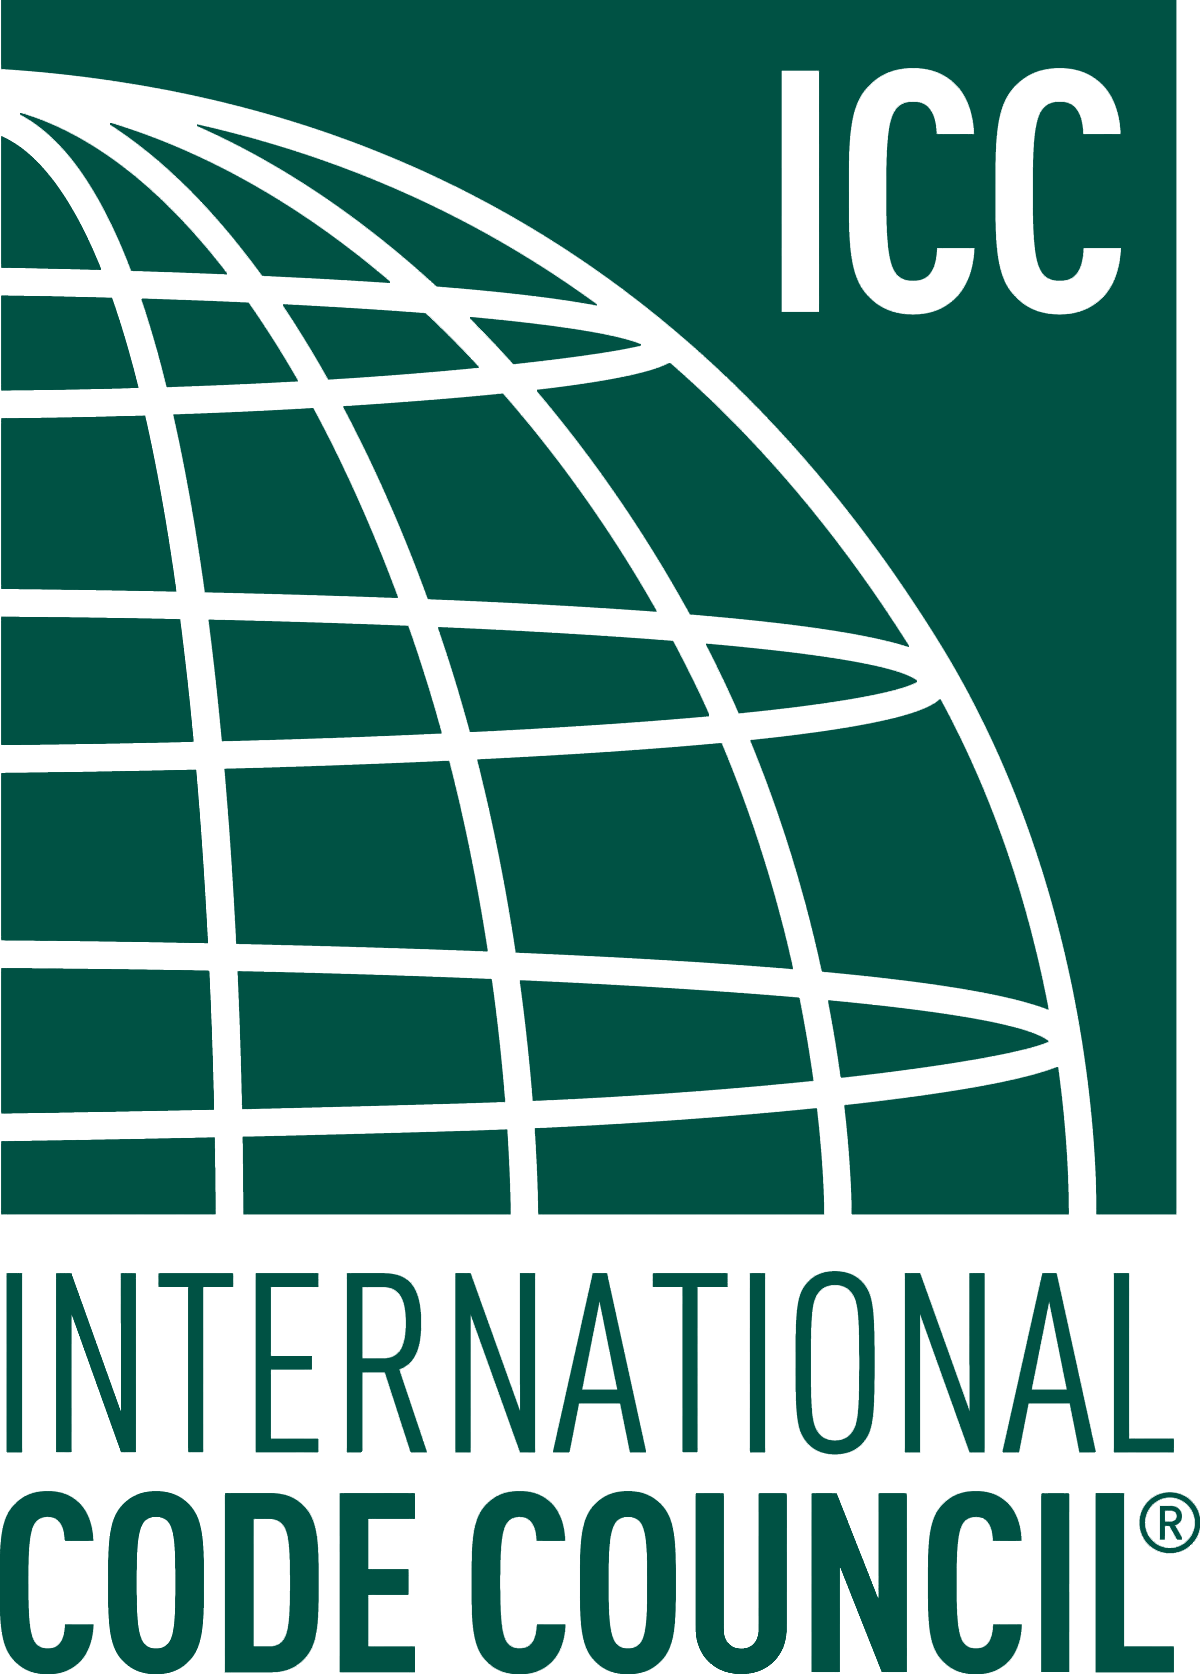 International Code Council logo